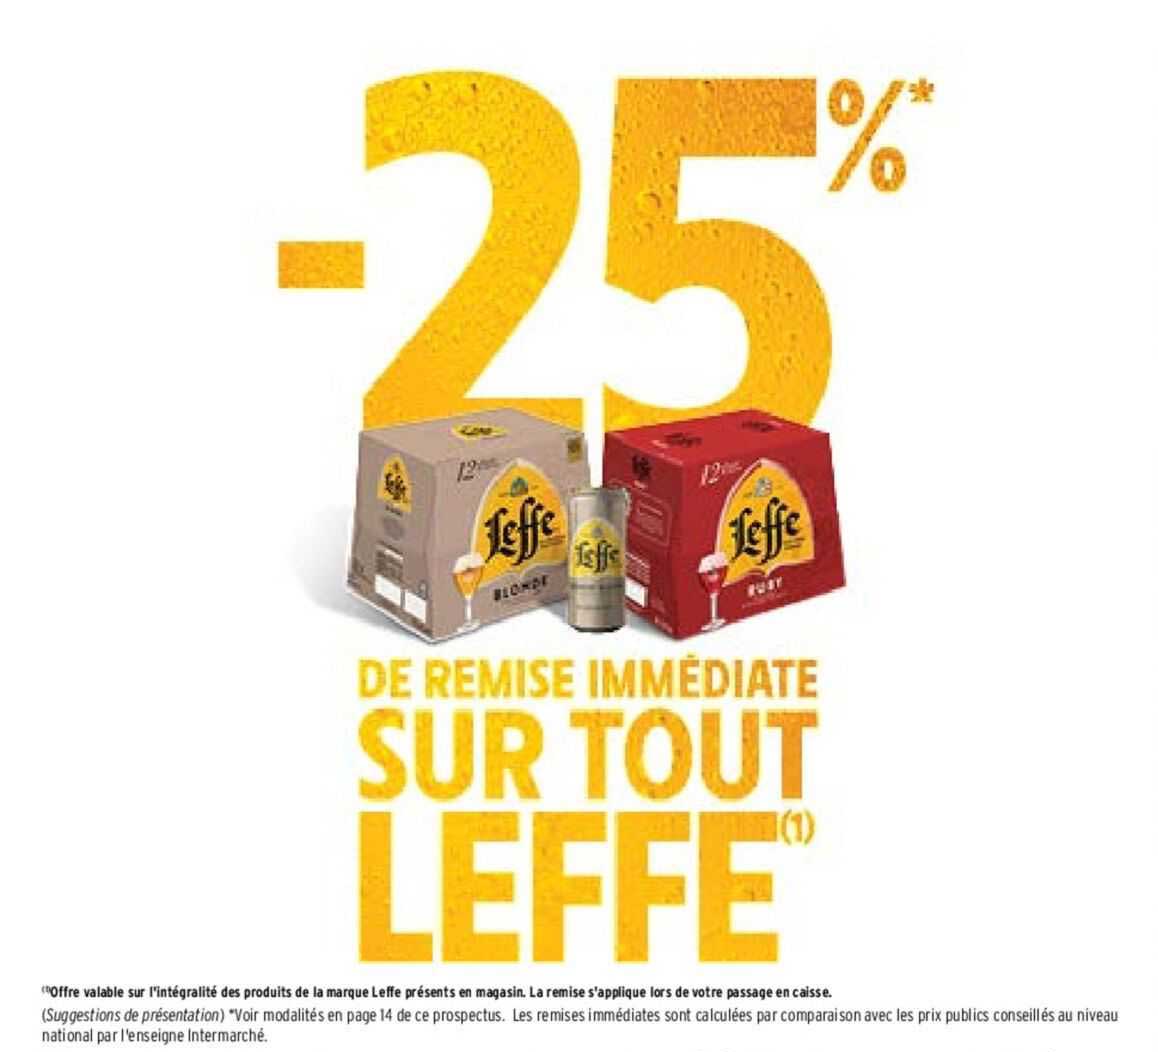 Promo Leffe Chez Intermarché Contact Icataloguefr 